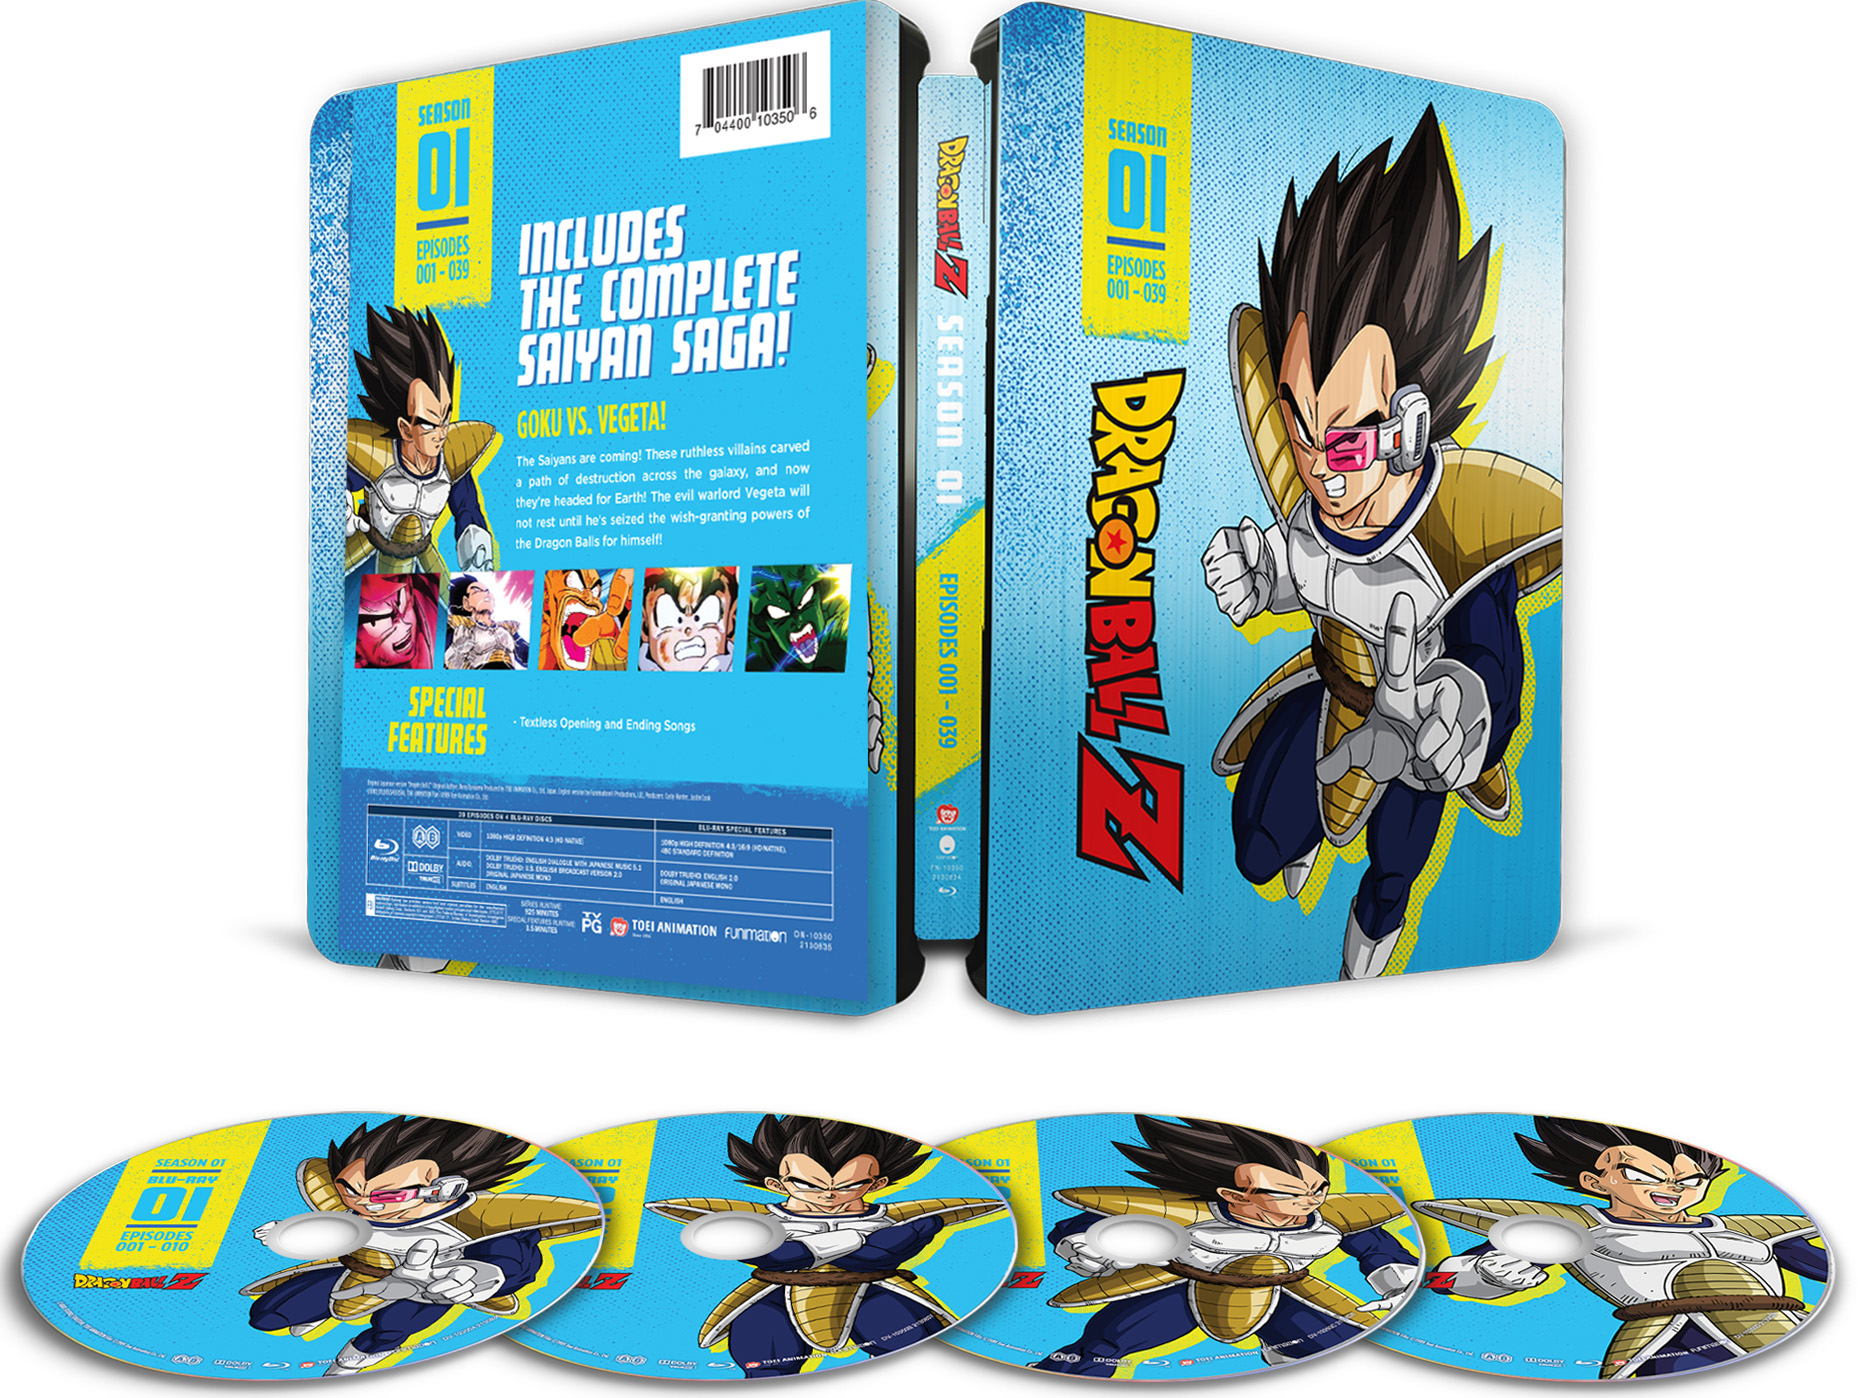 Dragon Ball Super - Part 1 - Blu-ray